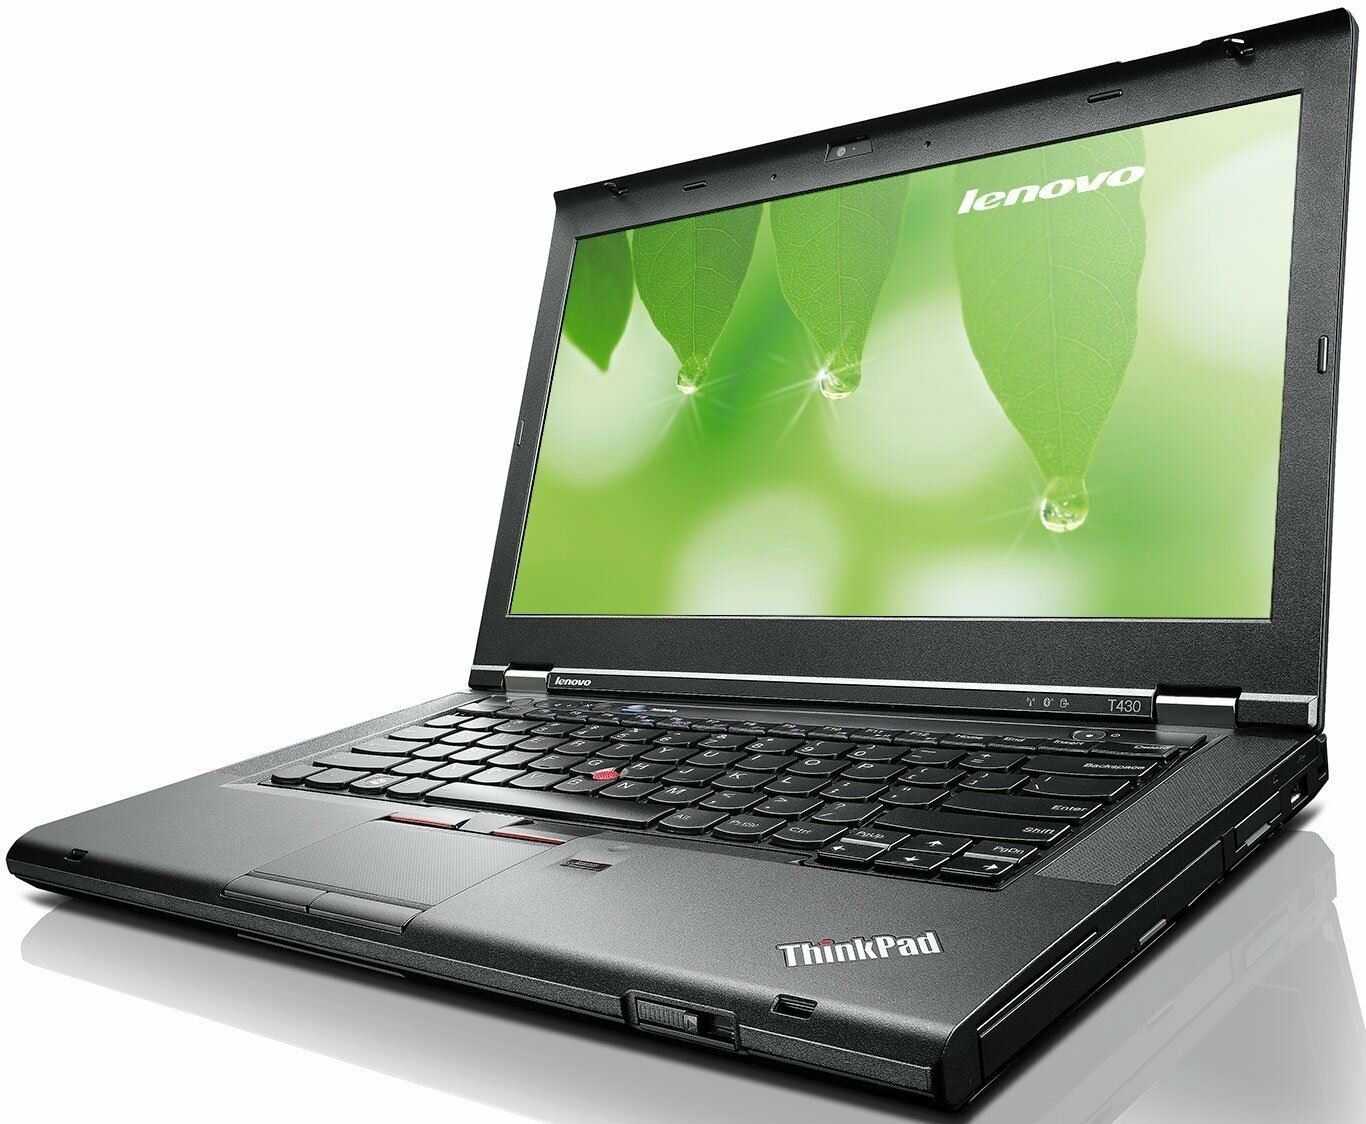 Ноутбук lenovo thinkpad edge e220s — купить, цена и характеристики, отзывы